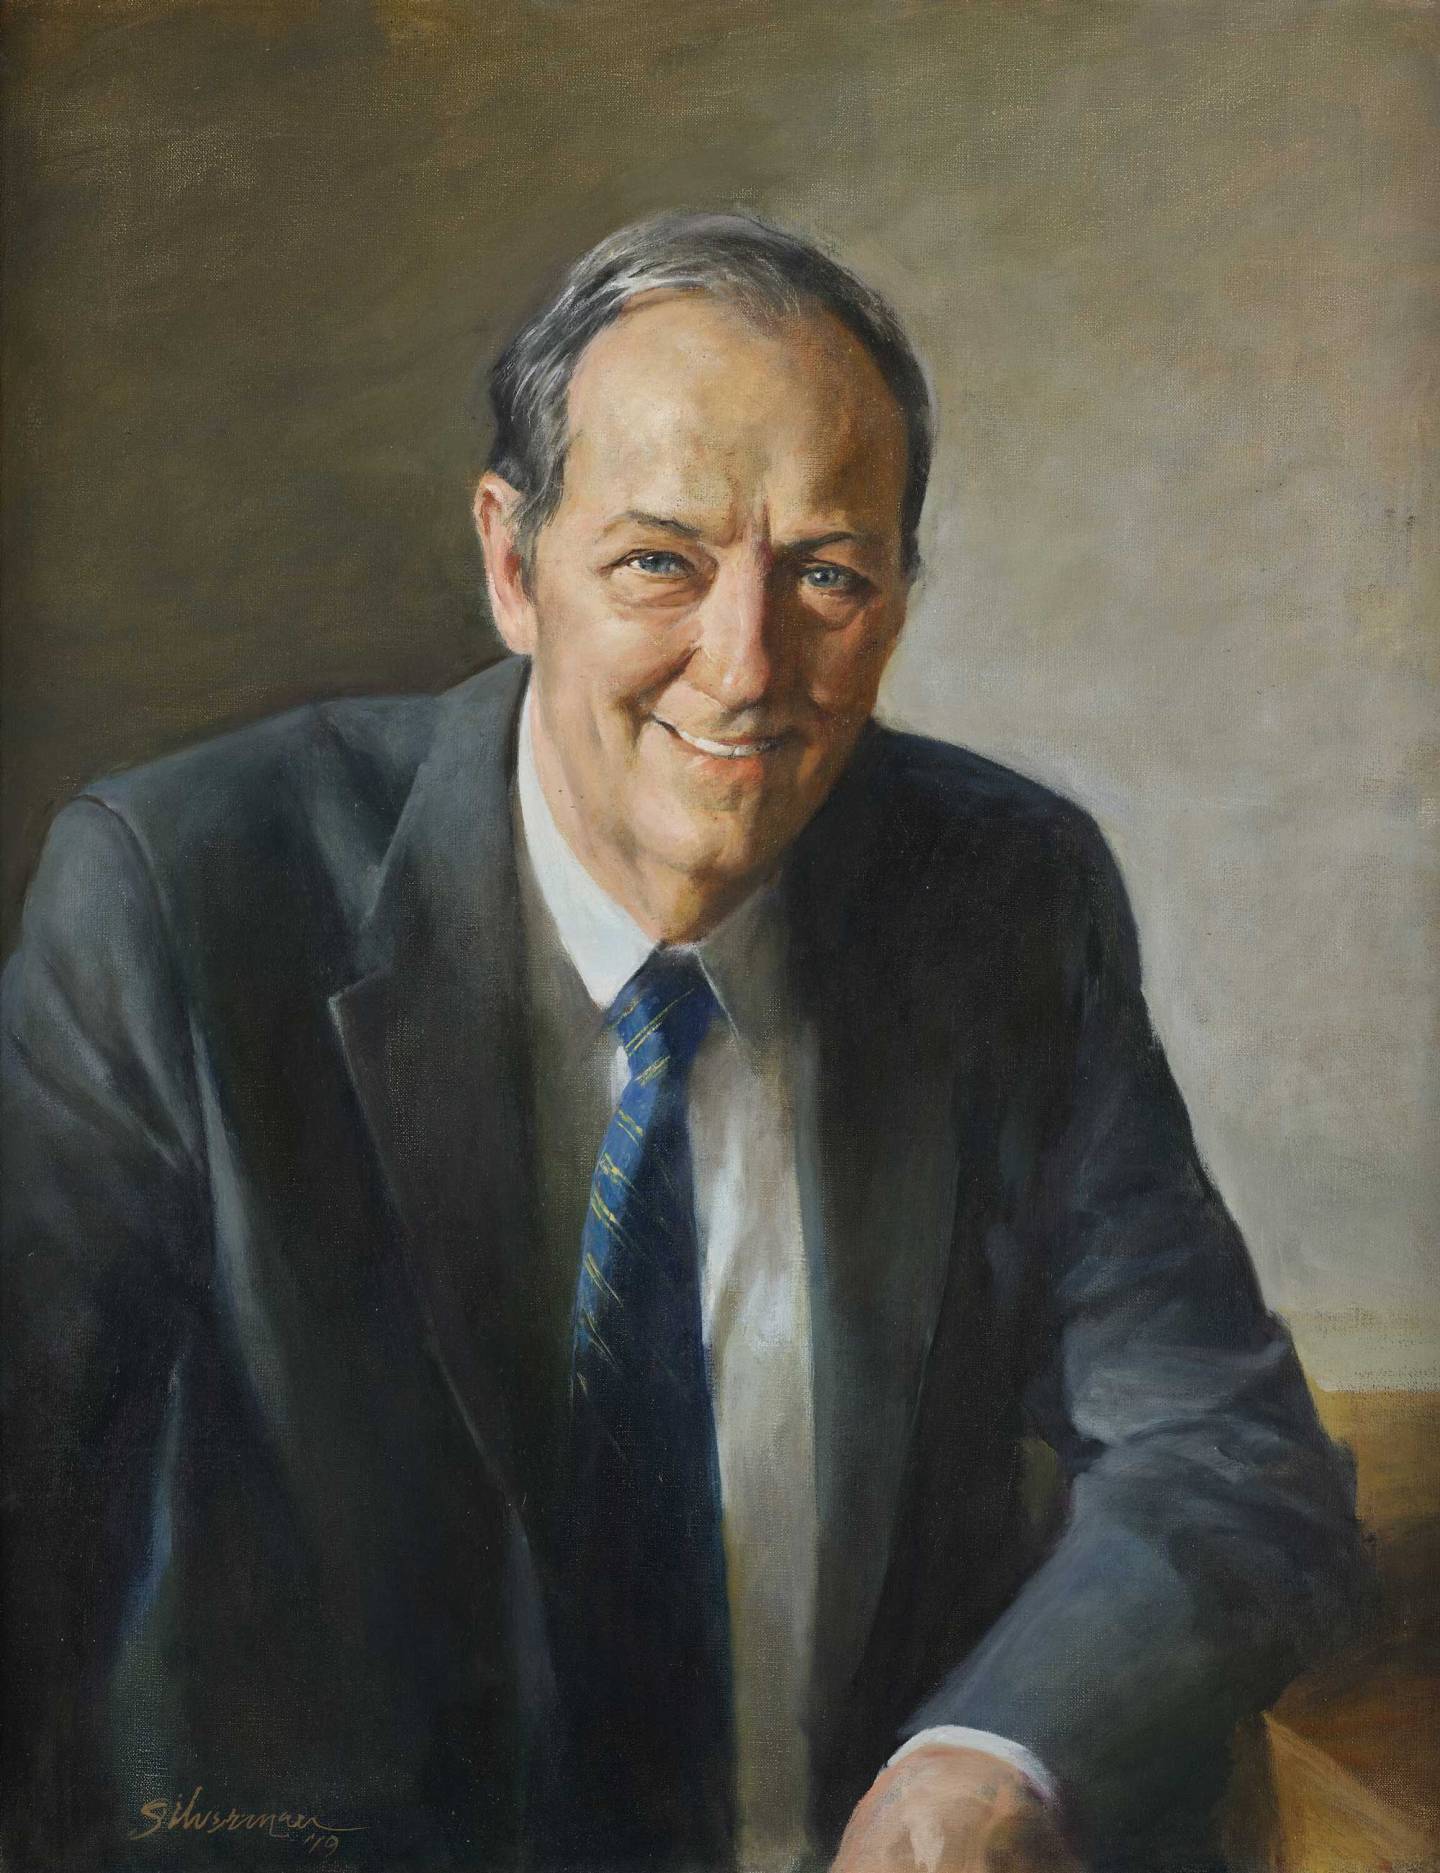 Painting of Bill Bradley